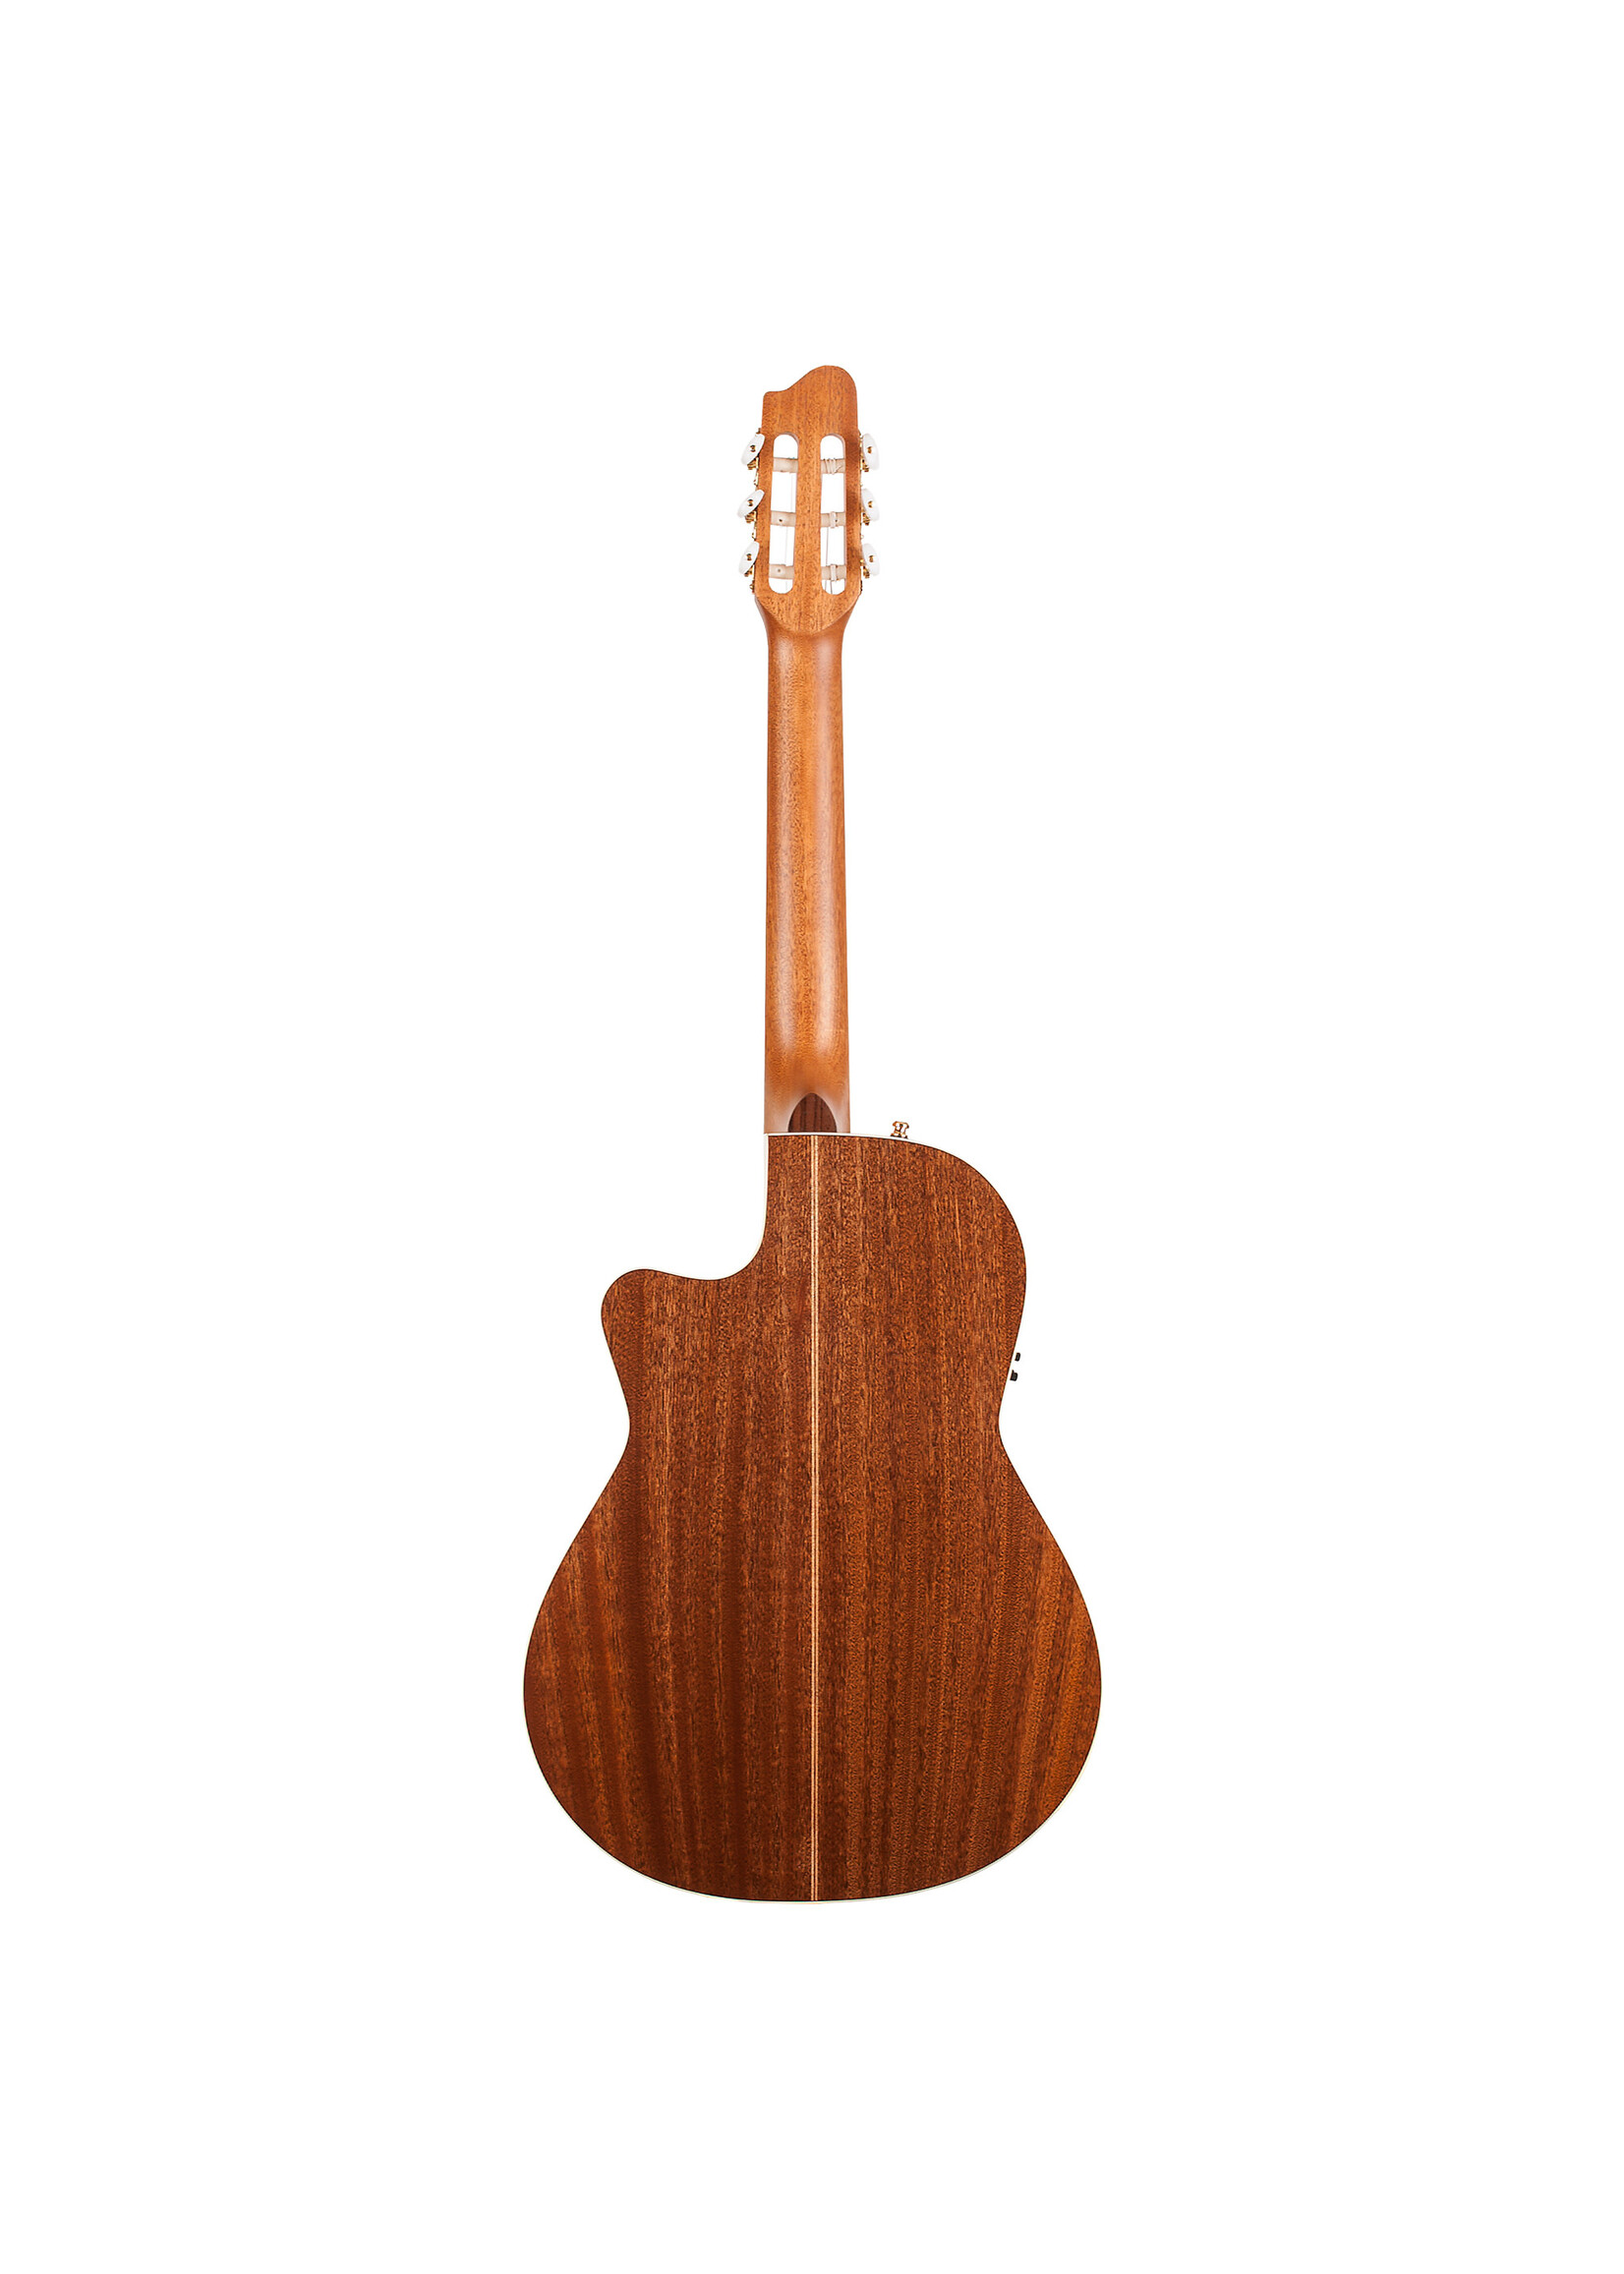 Godin Godin 051809 Arena Mahogany CW Clasica II Thin Profile Nylon String Guitar